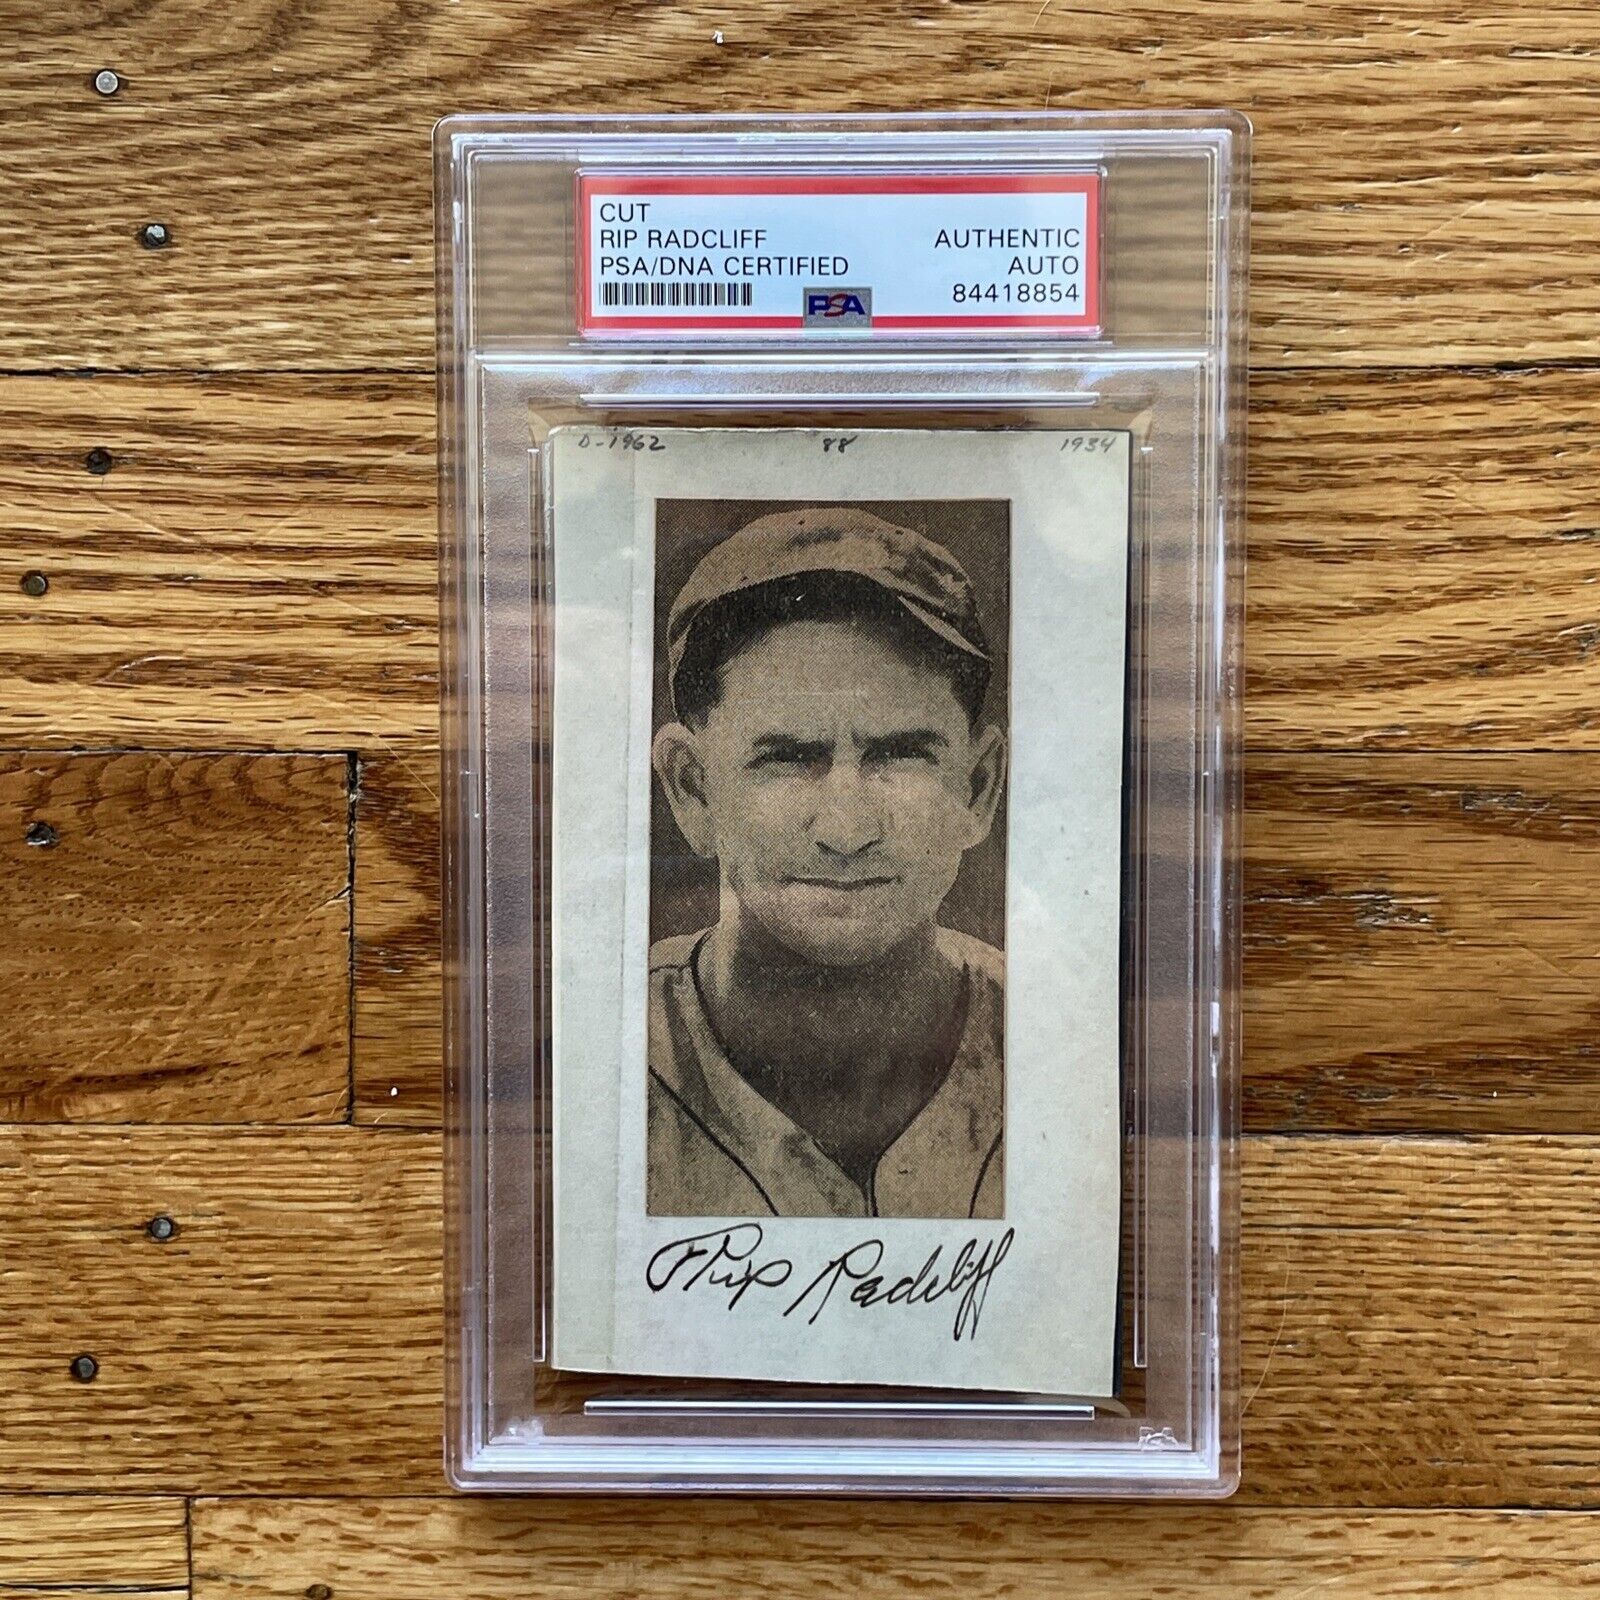 RARE Vintage Rip Radcliff Autograph Signed MLB Baseball Card PSA/DNA Died 1962